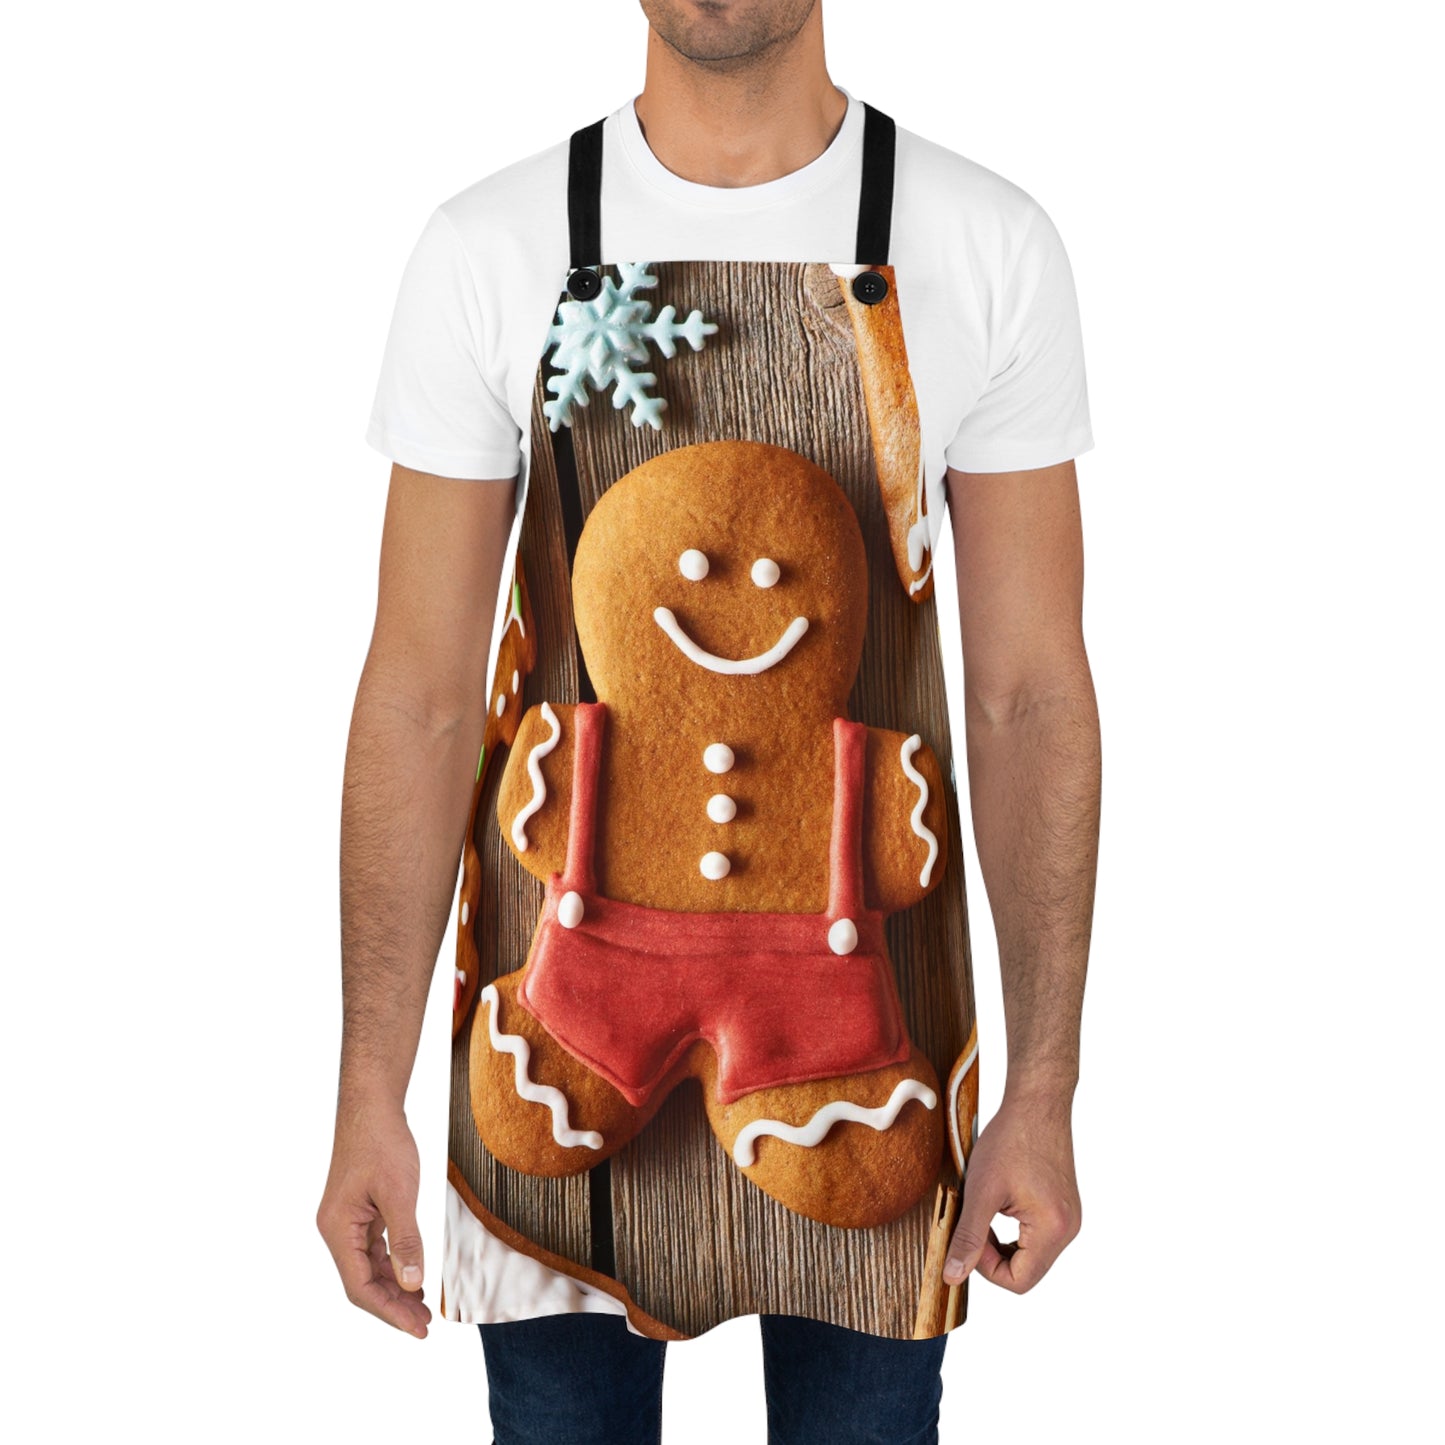 Gingerbread Man Apron (AOP)